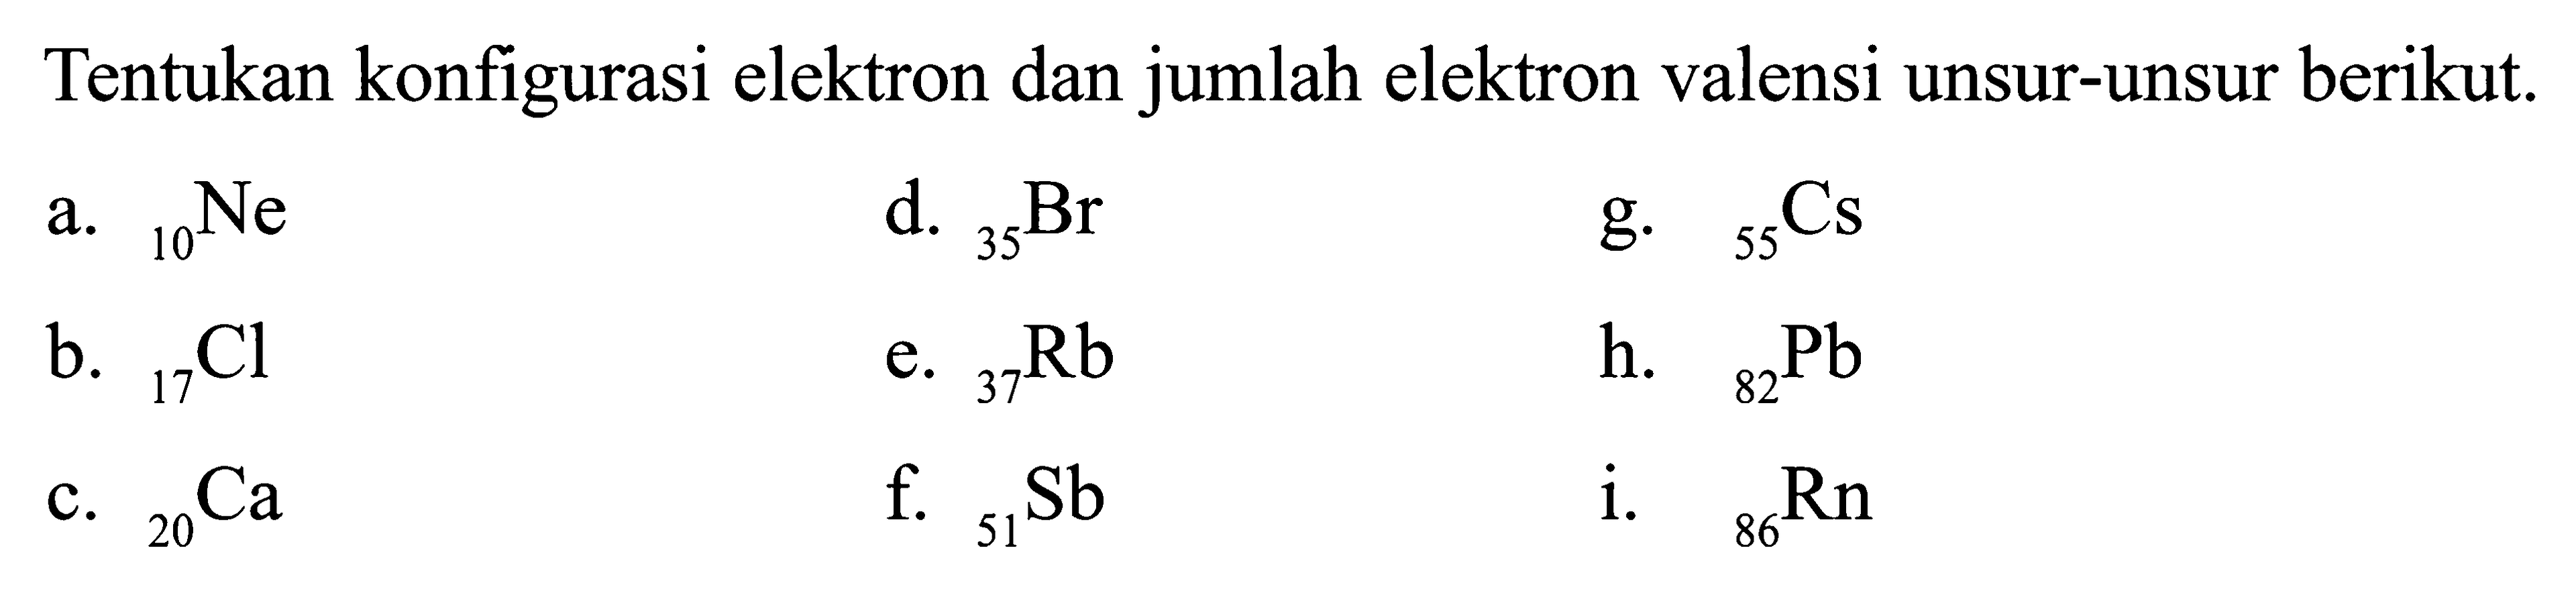 Tentukan konfigurasi elektron dan jumlah elektron valensi unsur-unsur berikut. a. 10Ne d. 35Br g. 55Cs b. 17Cl e. 37Rb h. 82Pb c. 20Ca f. 51Sb i. 86Rn